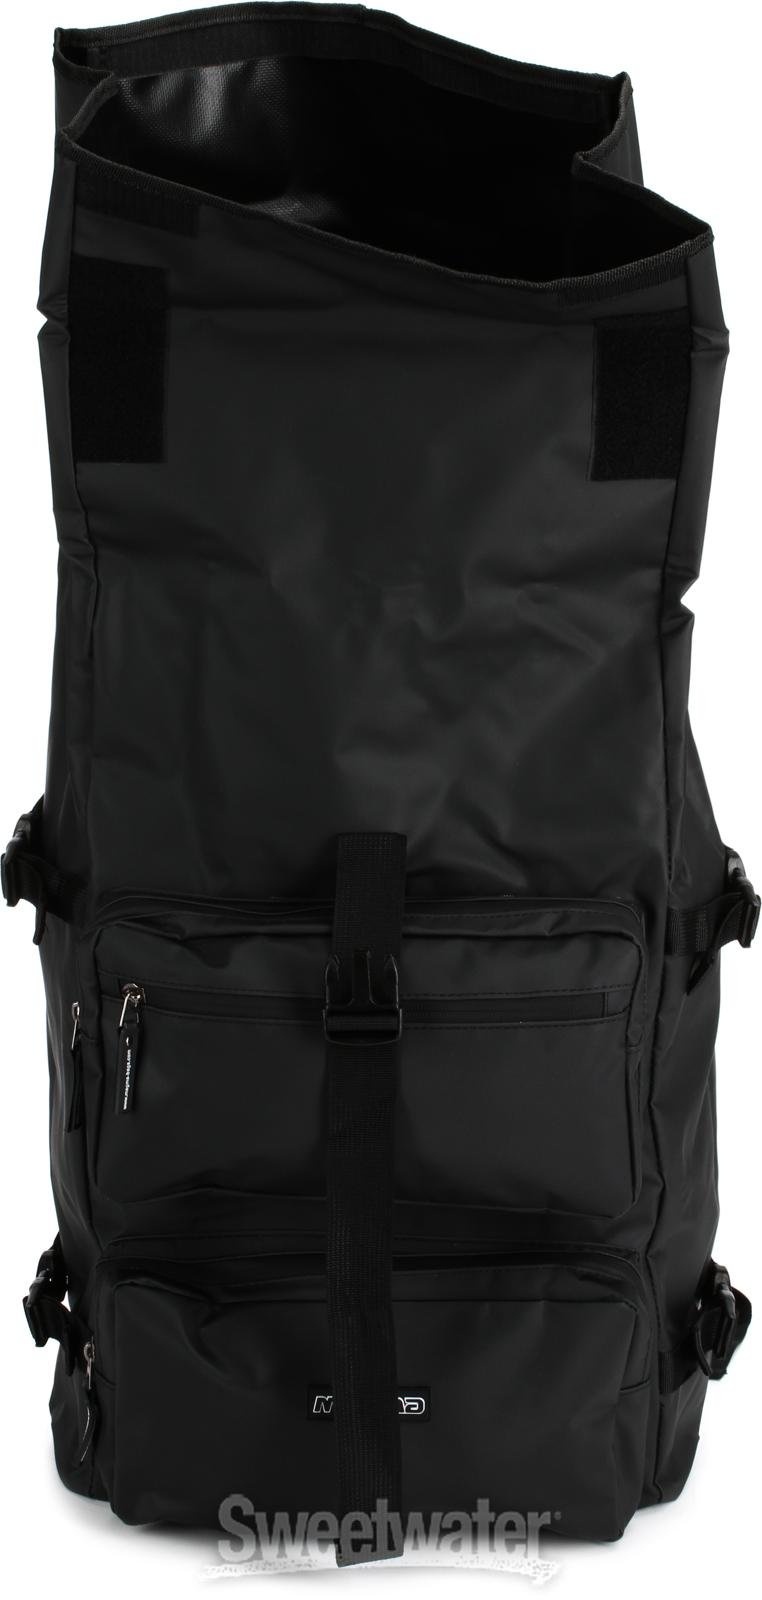 Magma Bags Rolltop Backpack Iii Weatherproof Dj Backpack